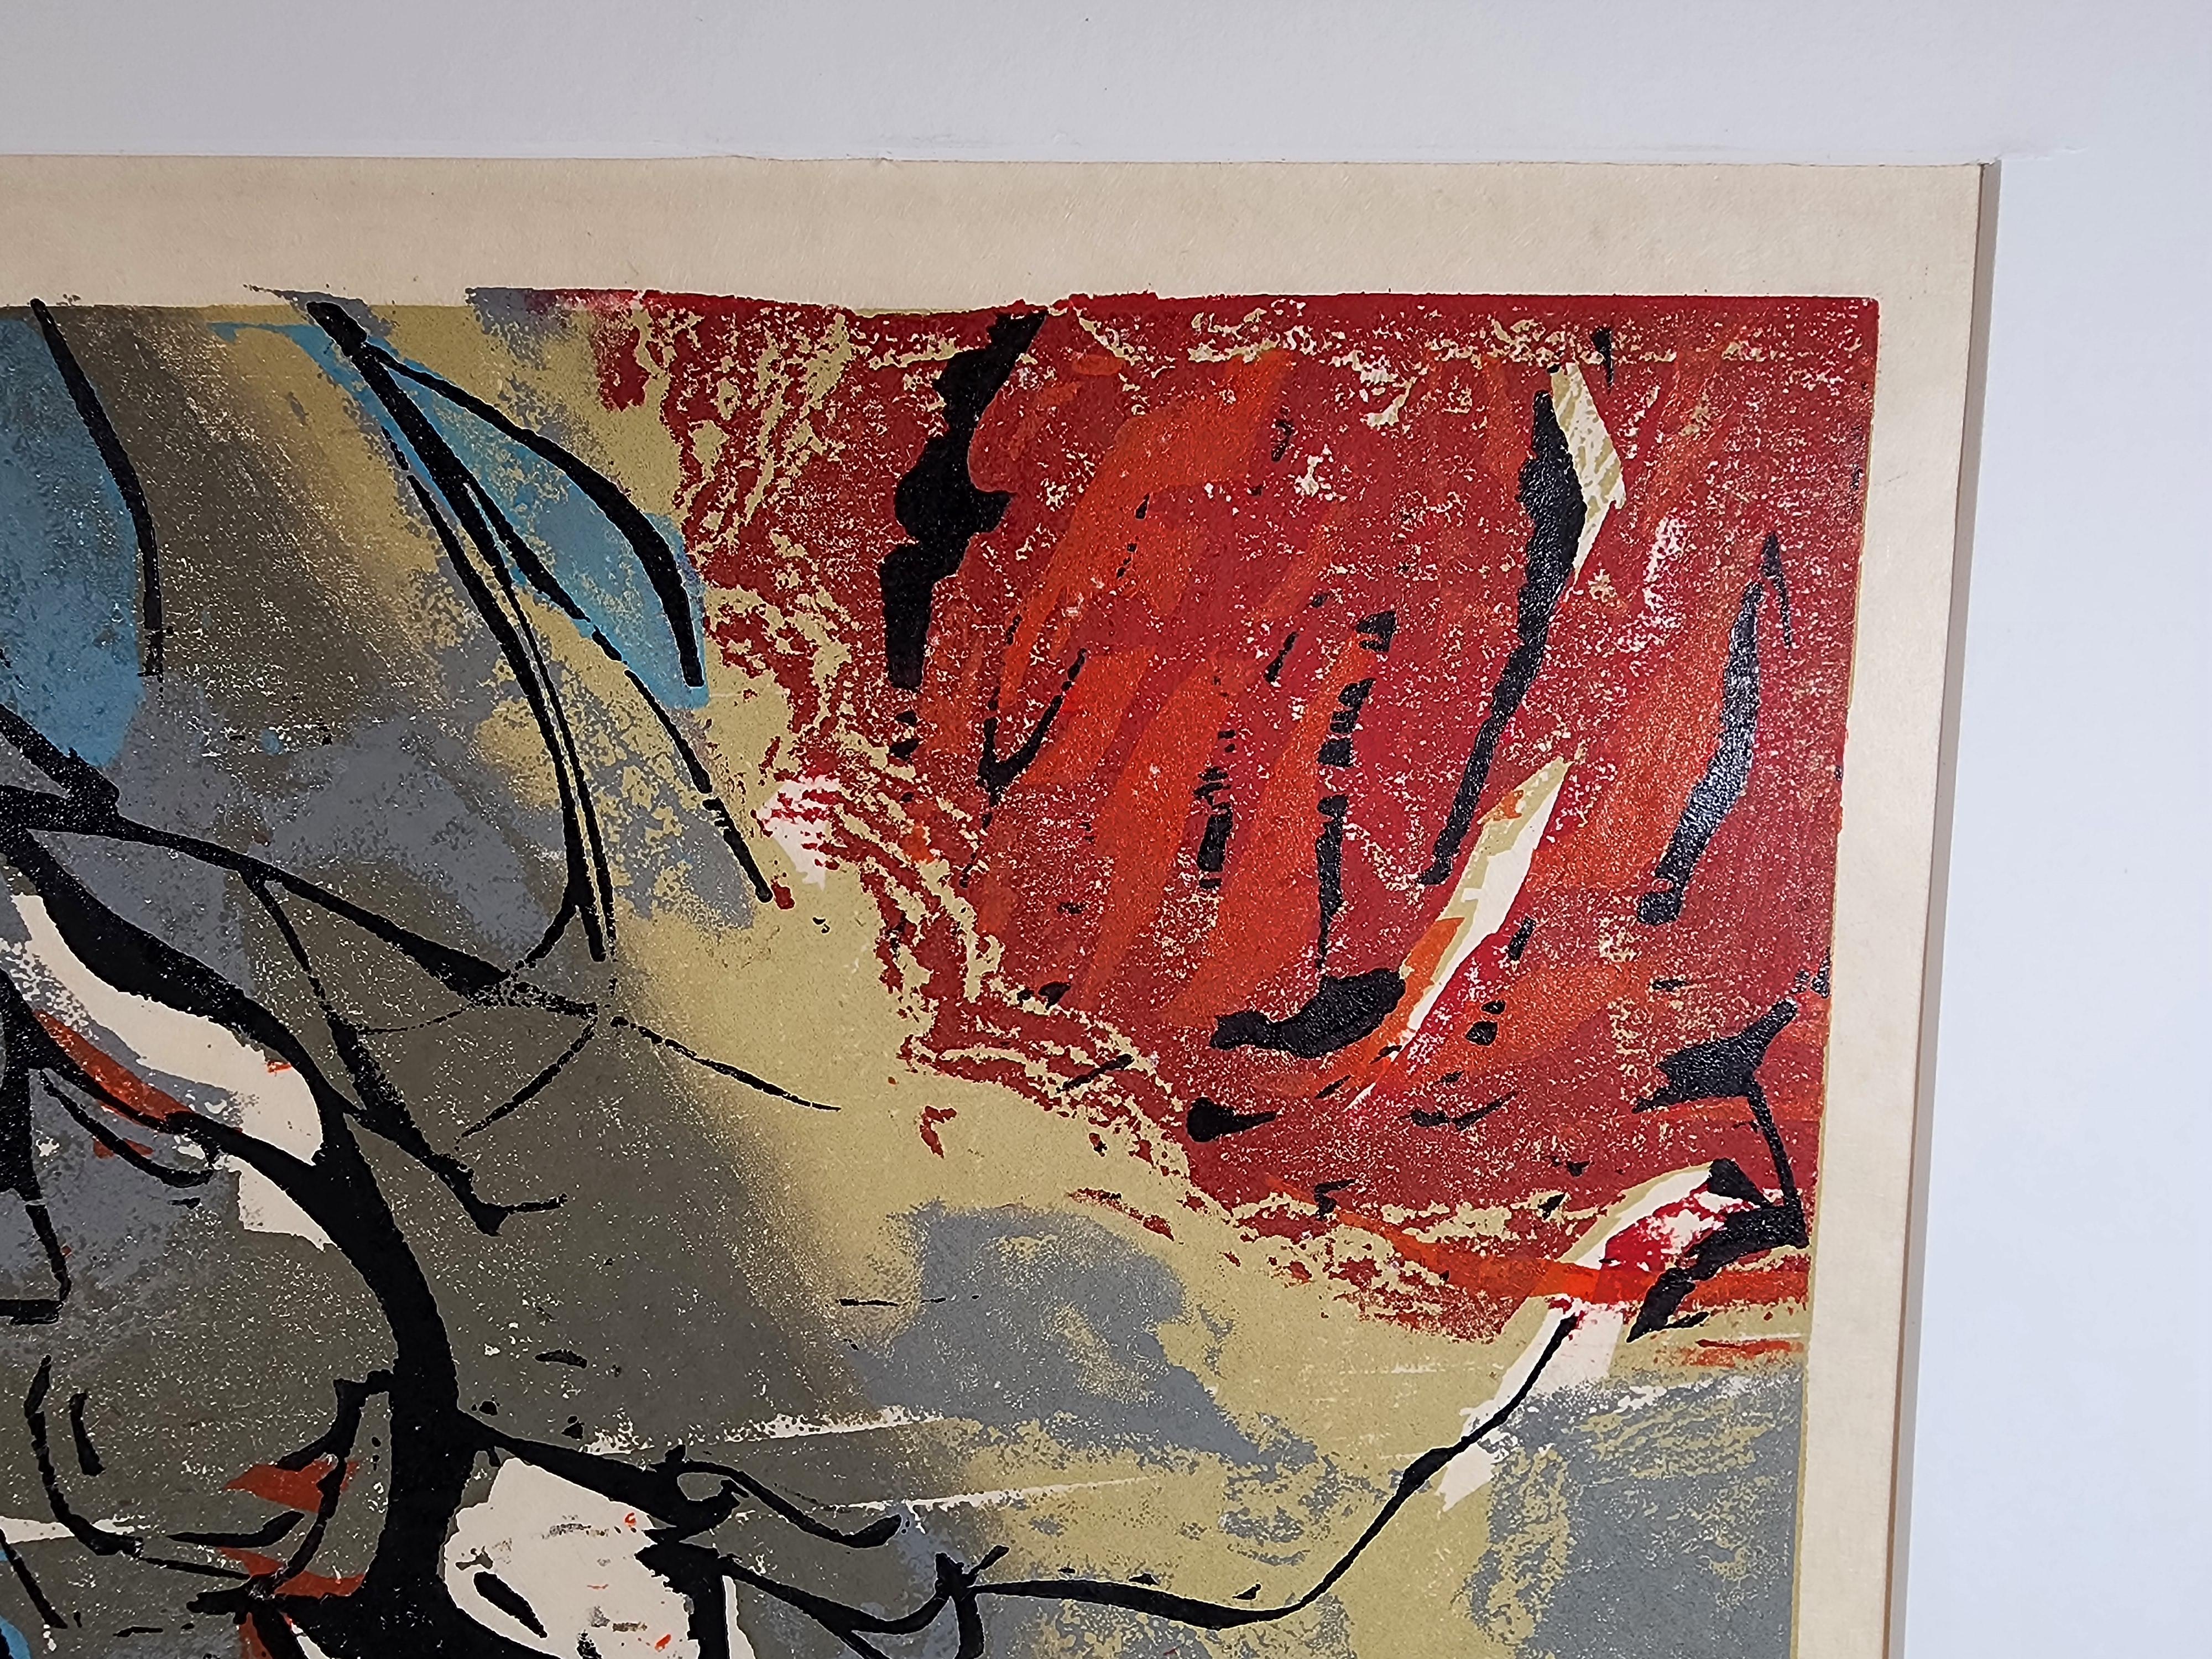 Five color woodcut by the Massachusetts artist Walter Feldman.  Feldman had a distinguished career as a graduate of the Yale art program and professor of art at Brown University.
See his biography below:

Walter Feldman was born in 1925 in Lynn